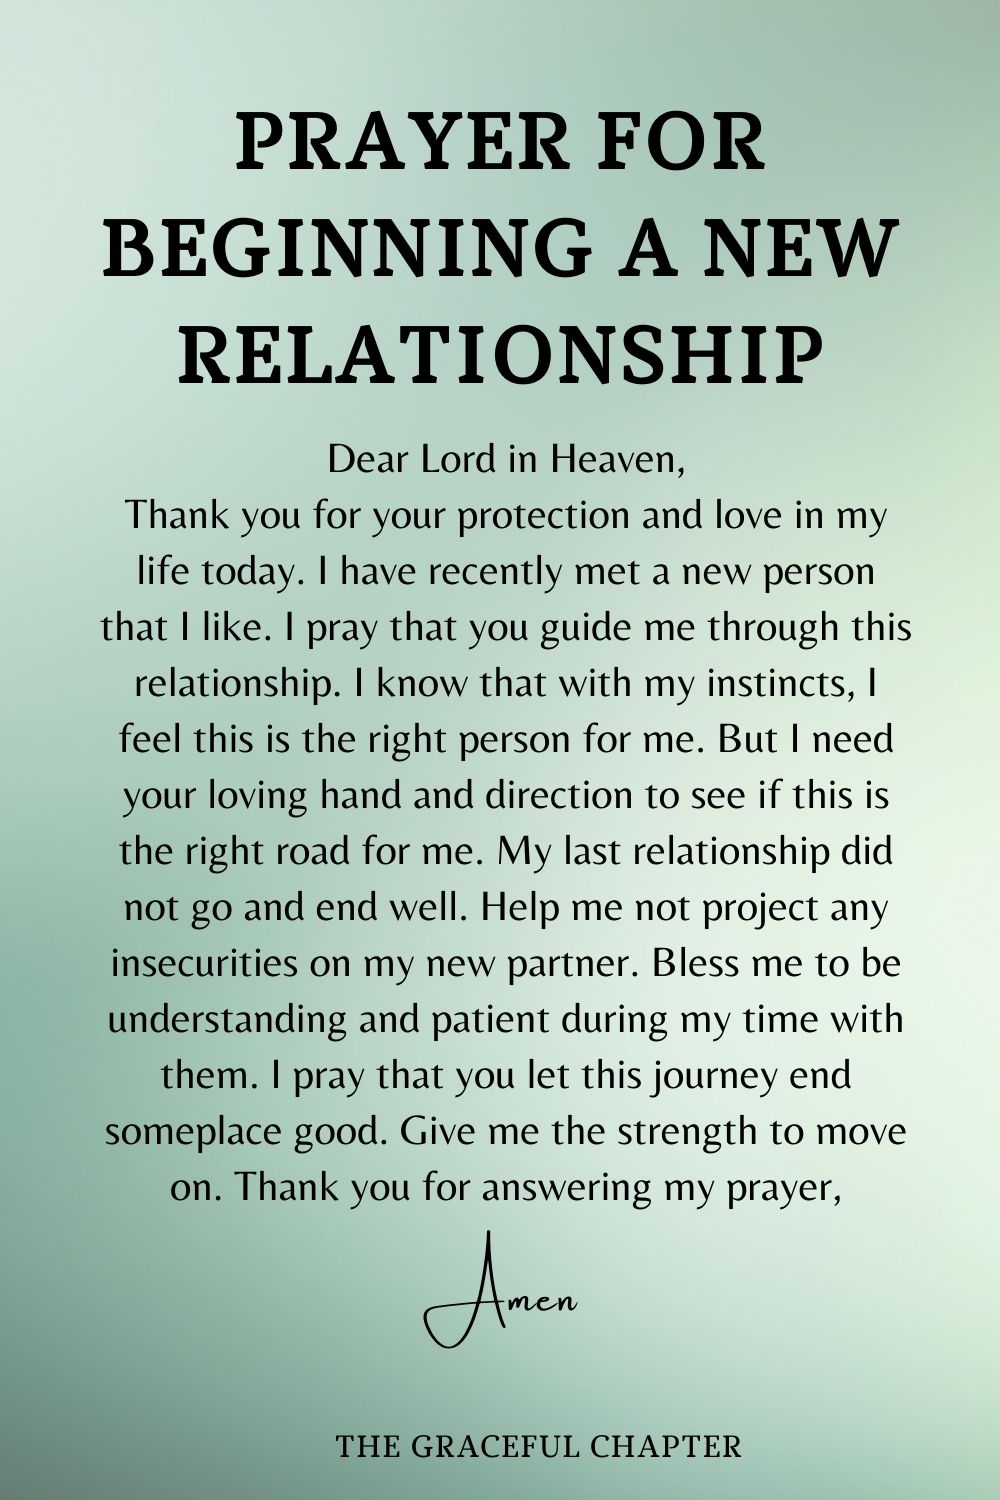 Prayer for beginning a new relationship